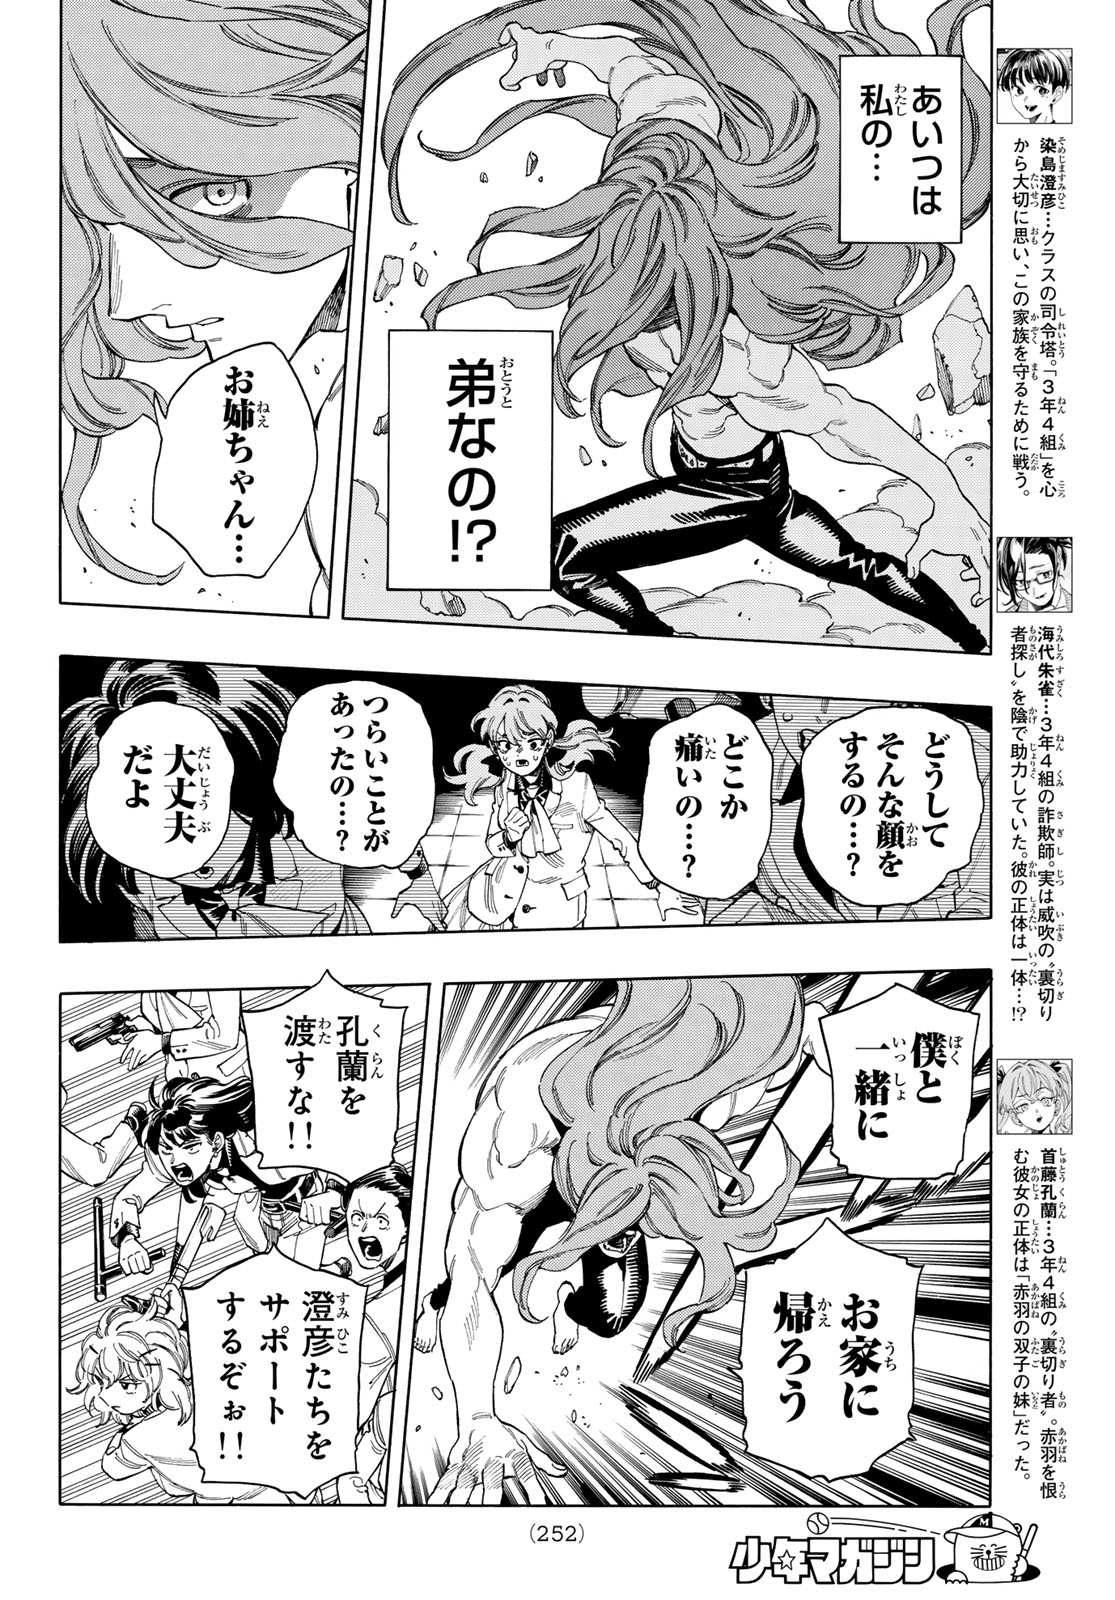 Akabane Honeko no Bodyguard - Chapter 69 - Page 2